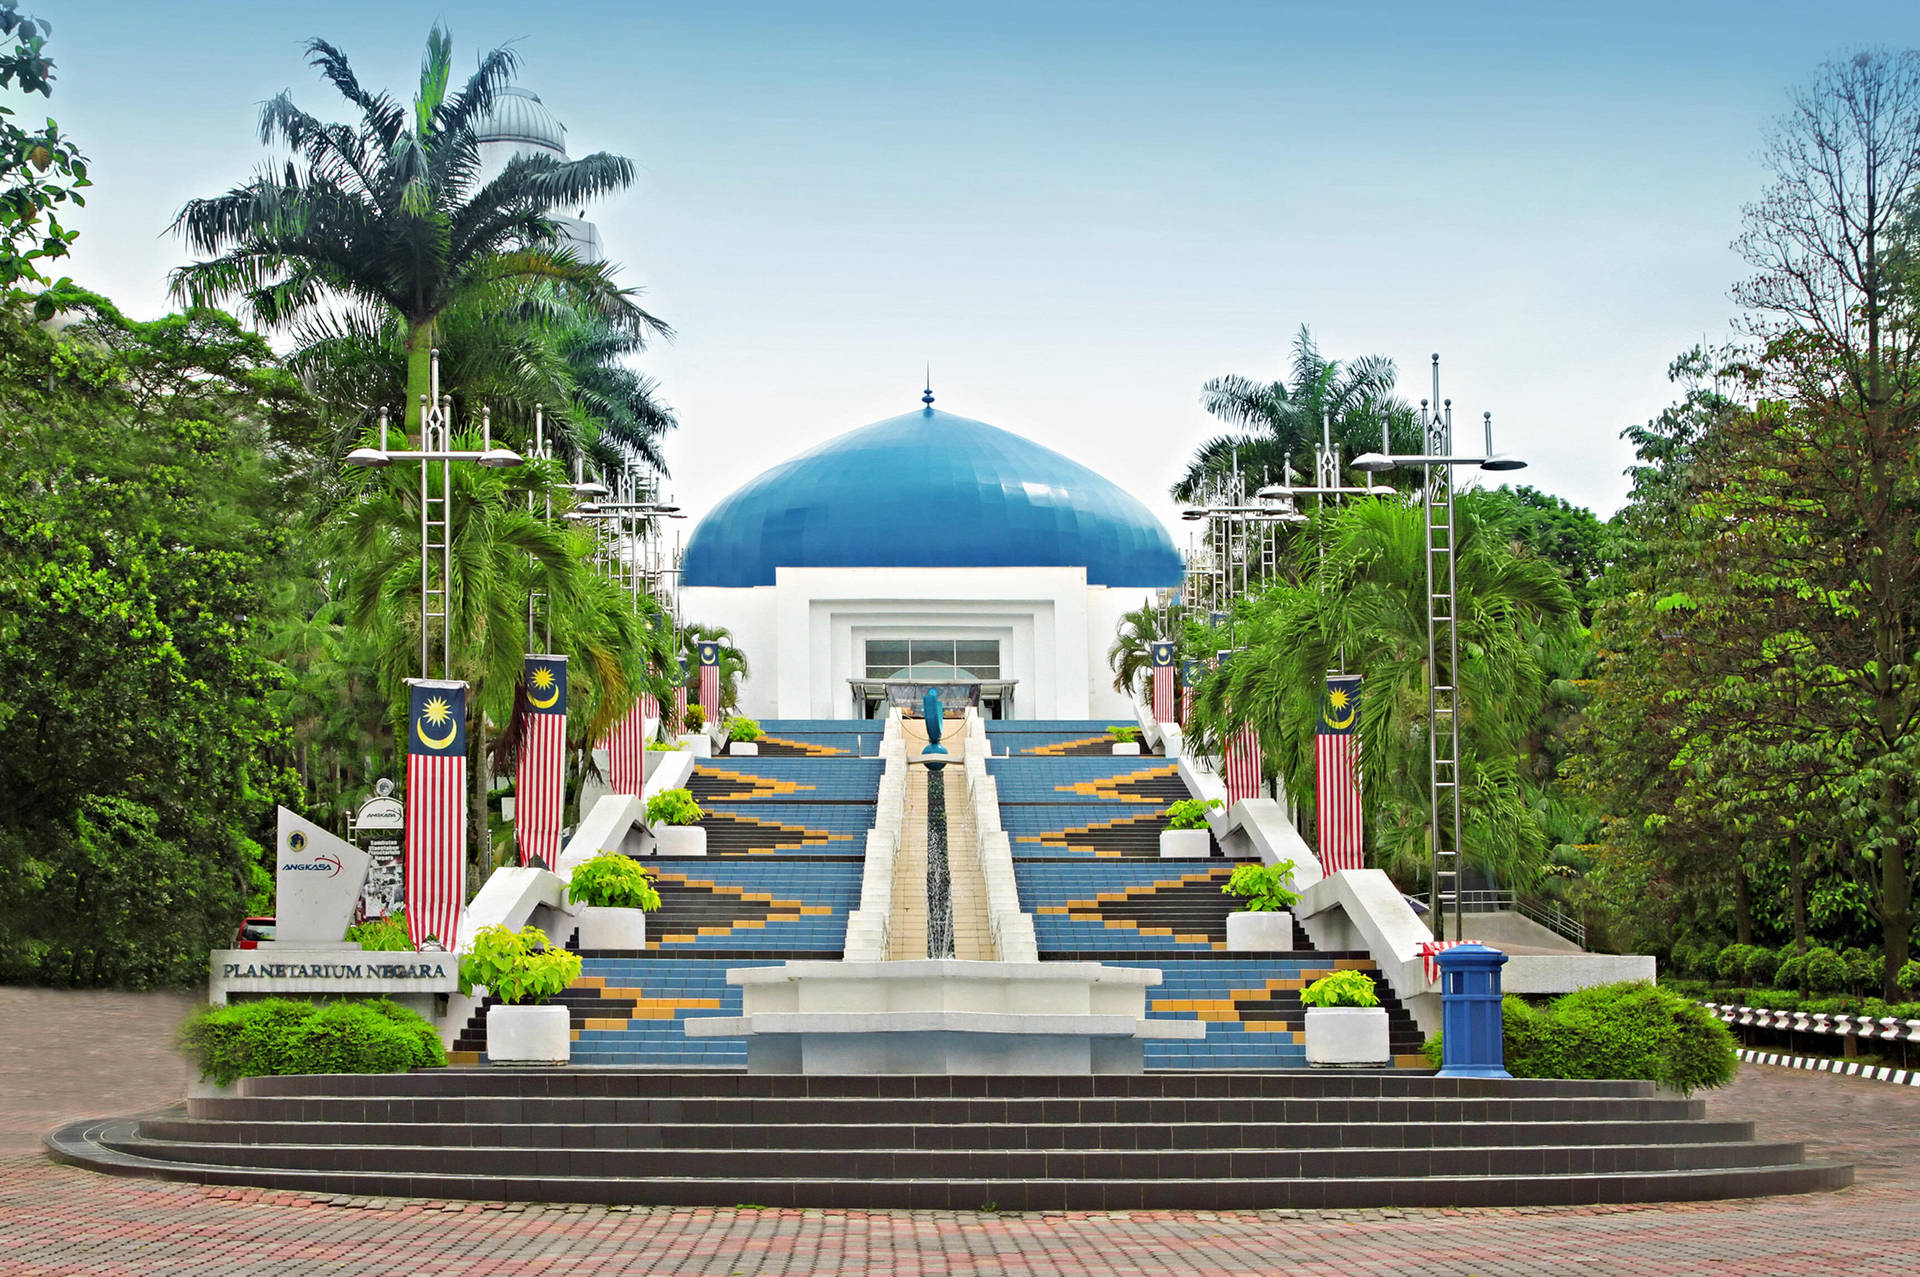 Planetarium Negara In Kuala Lumpur